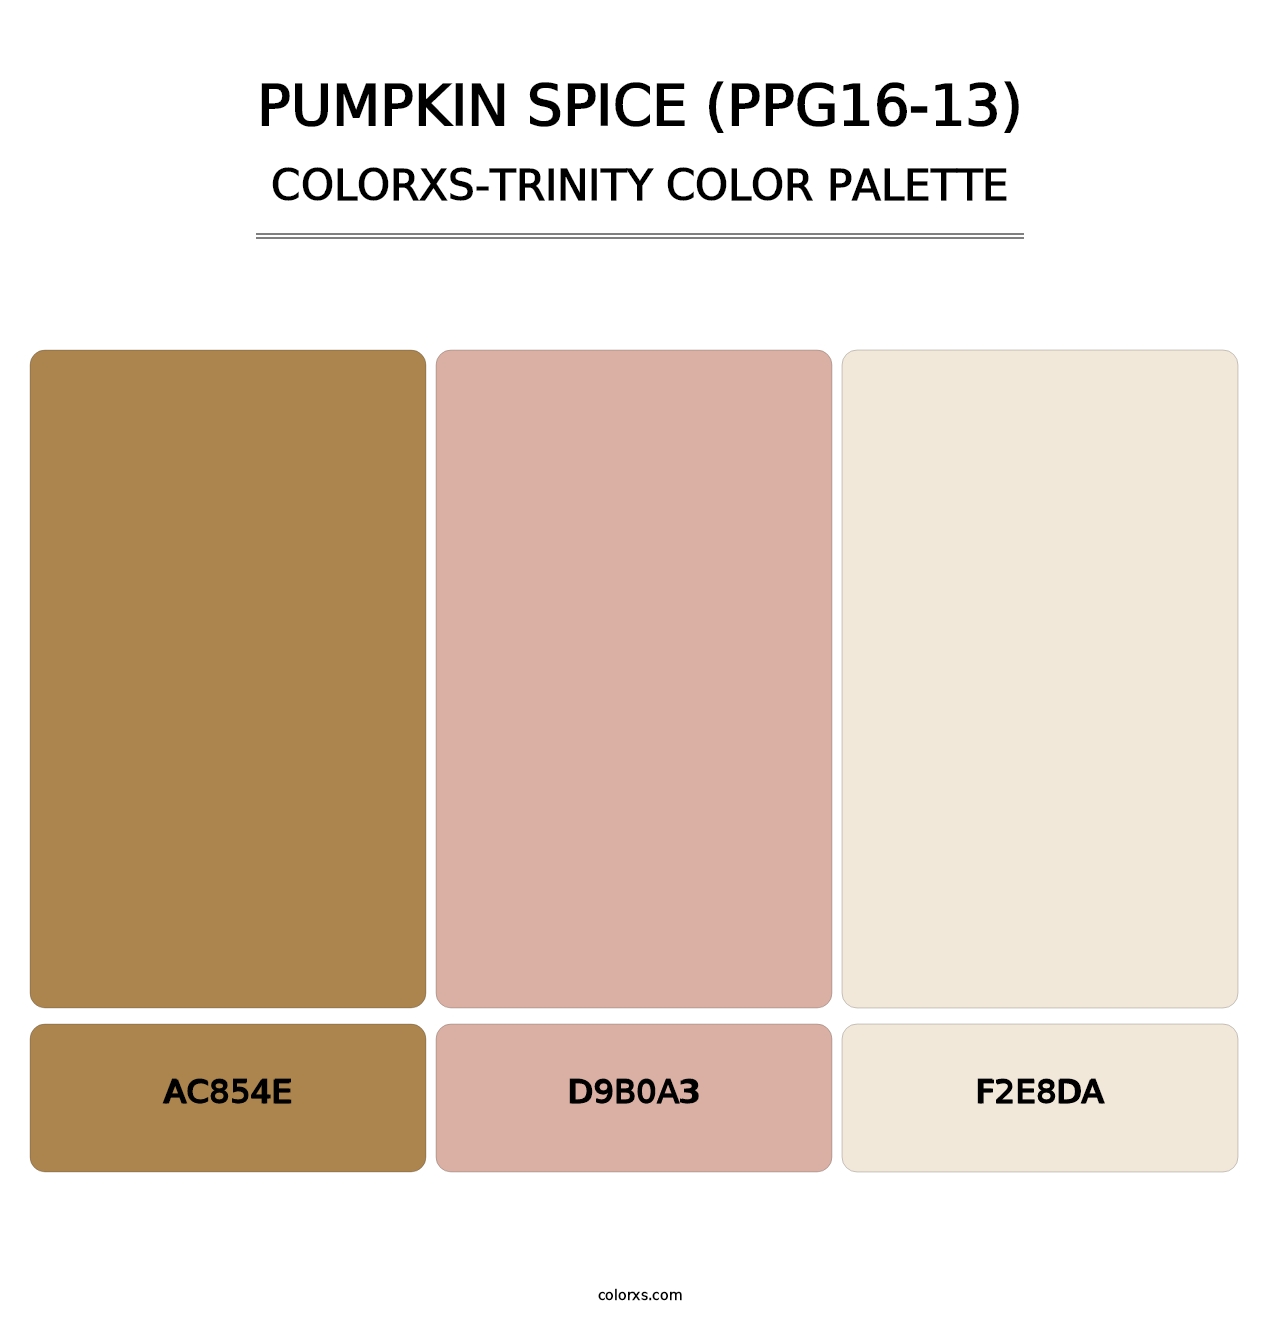 Pumpkin Spice (PPG16-13) - Colorxs Trinity Palette